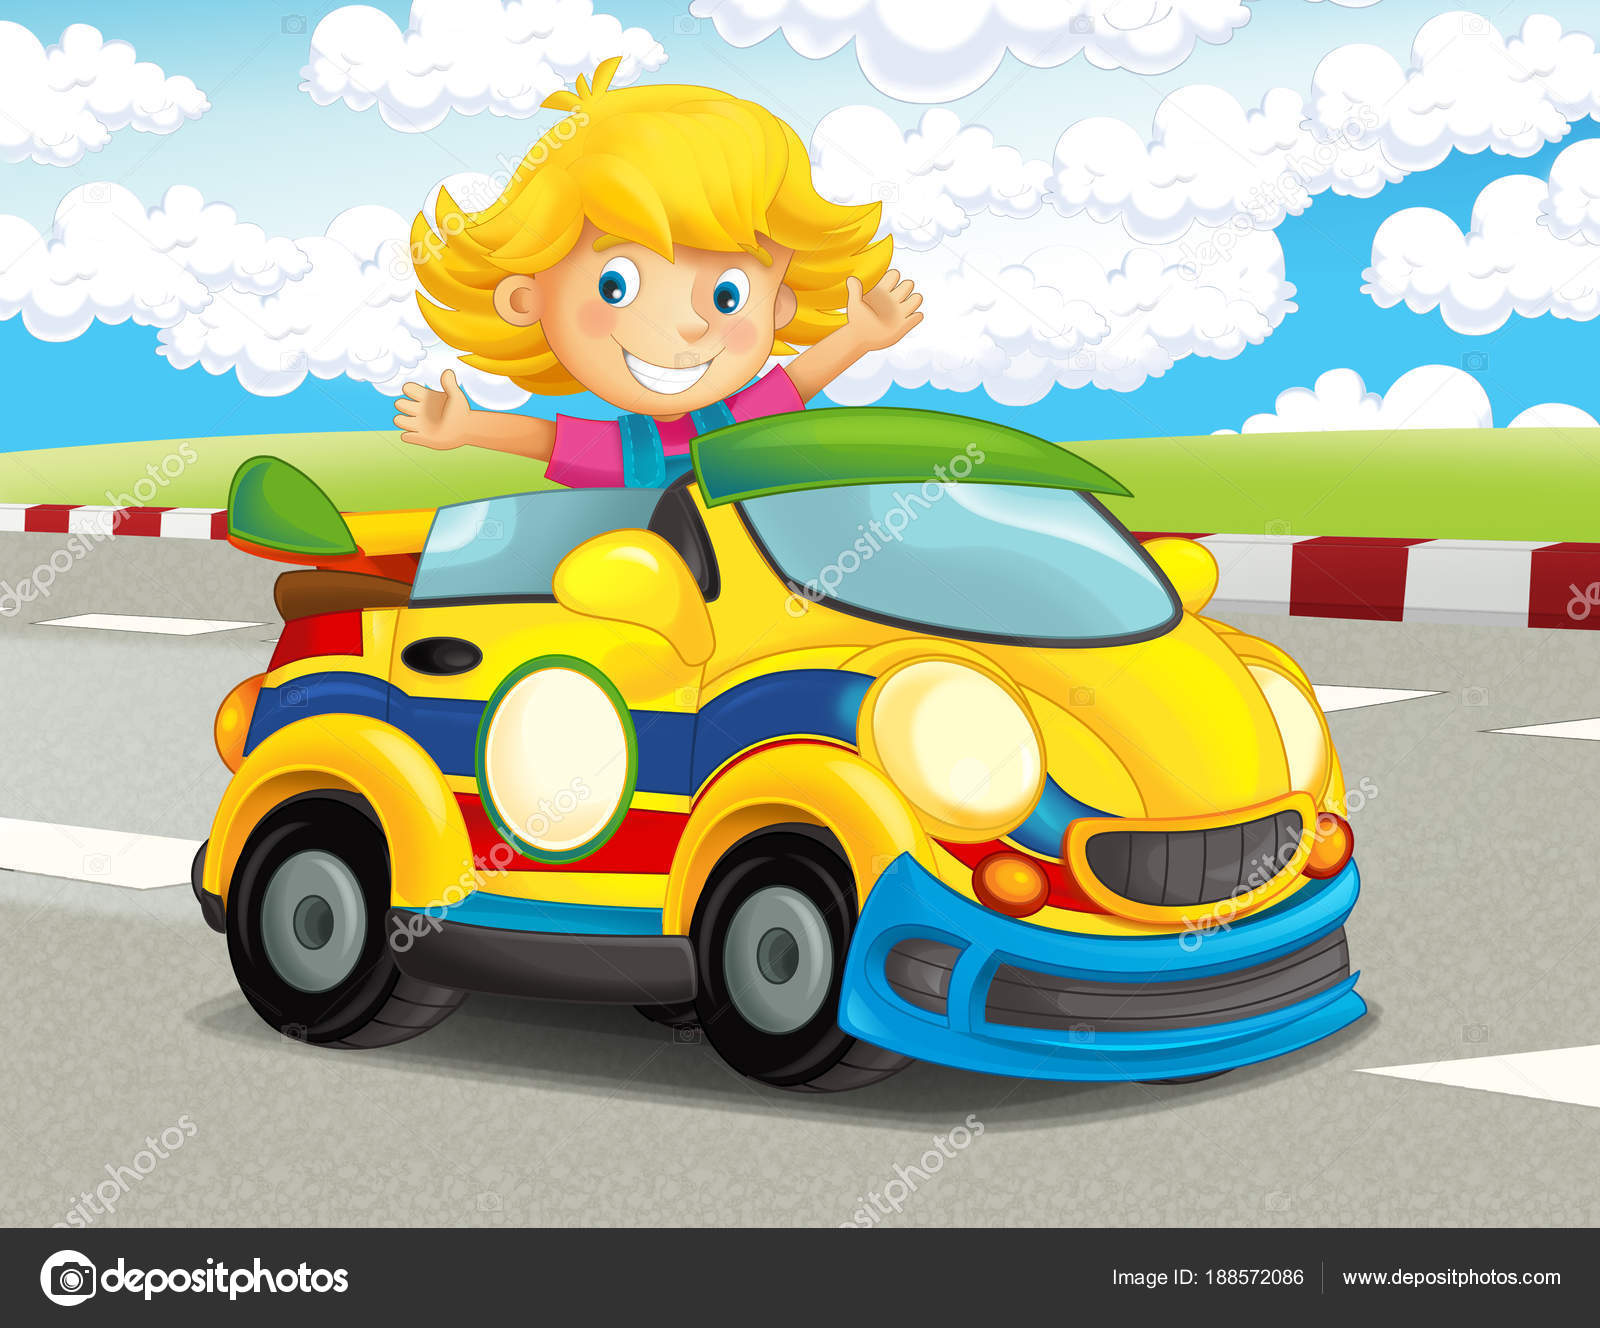 Cartoon Funny Happy Looking Child Girl Racing Car Race Track Stock Photo by  ©illustrator_hft 188572086